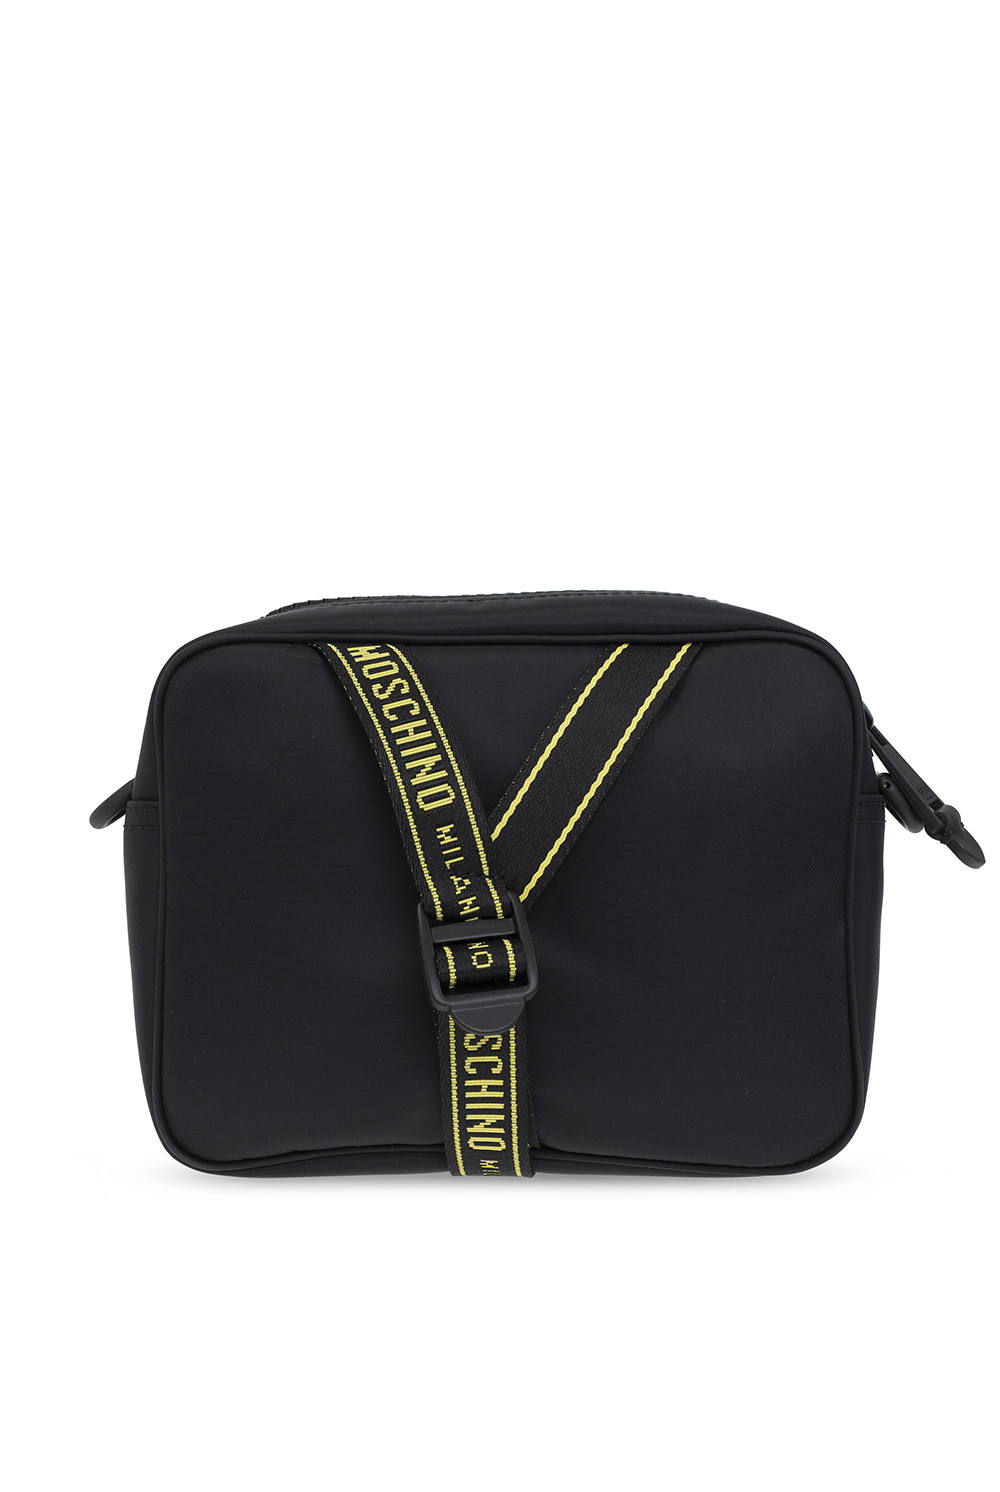 Moschino Shoulder bag paisley-print with logo